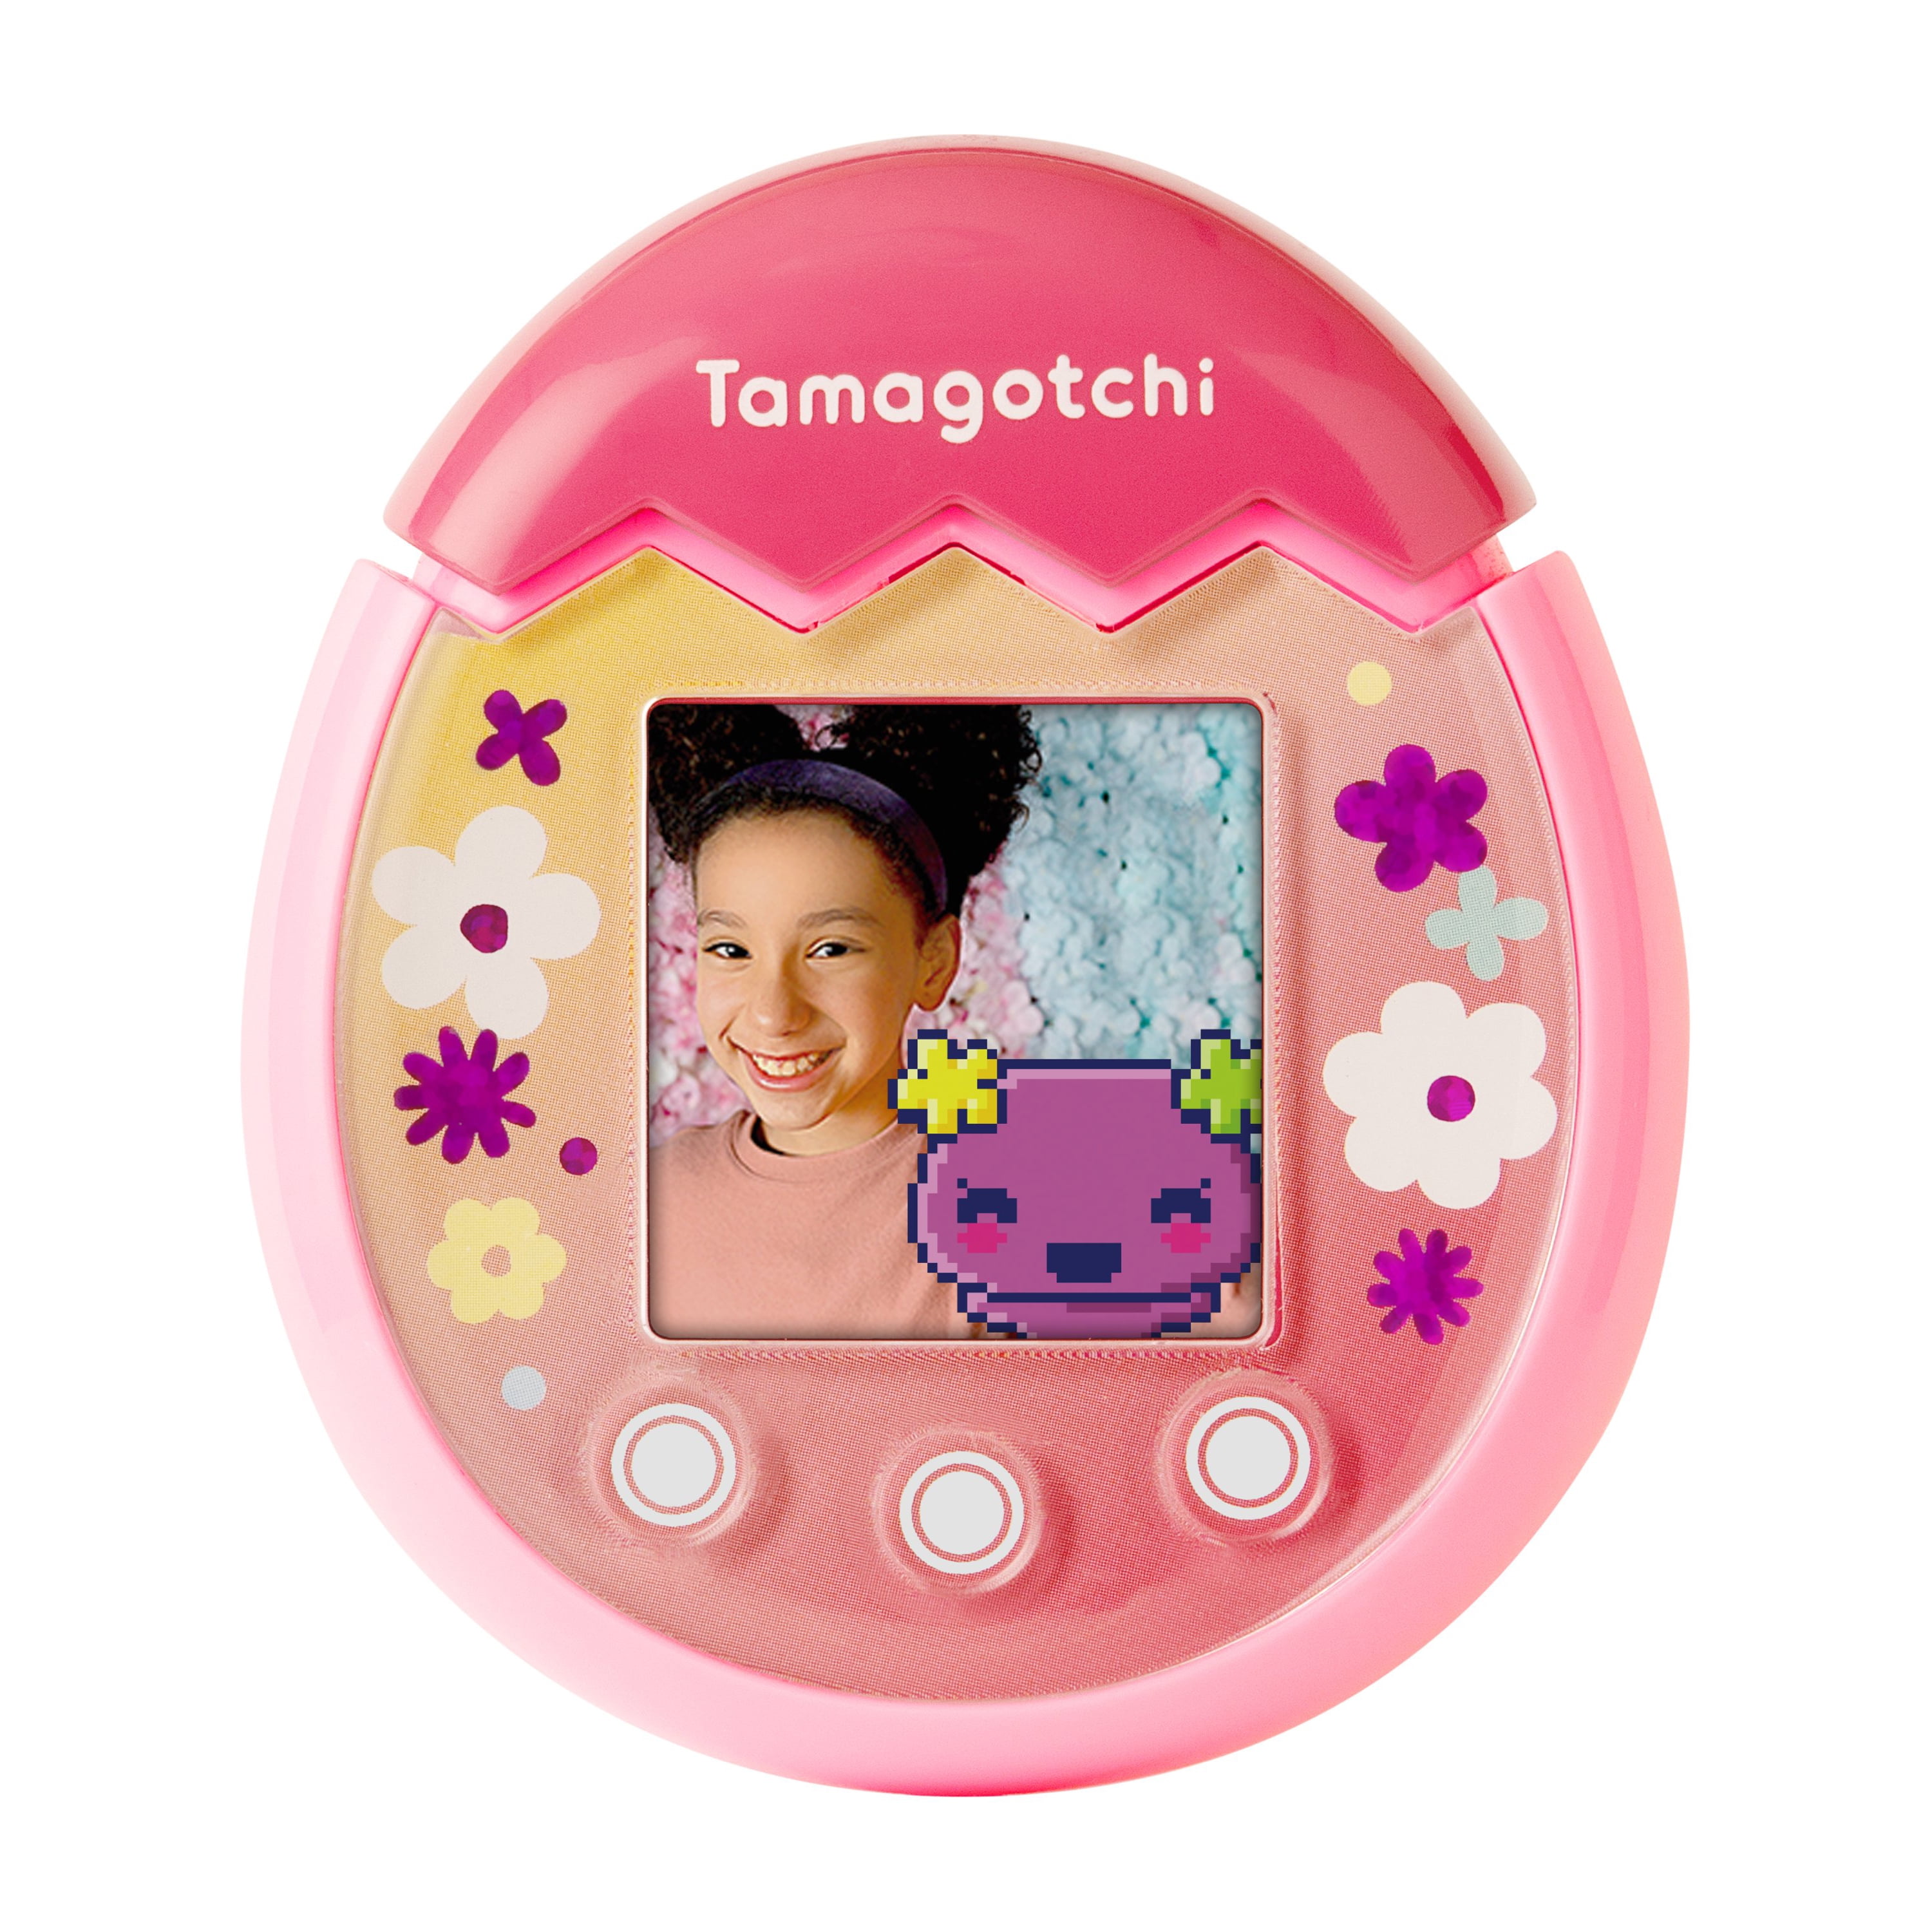 tamagotchi bandai 20th anniversary pink yellow blue orange egg virtual pet 